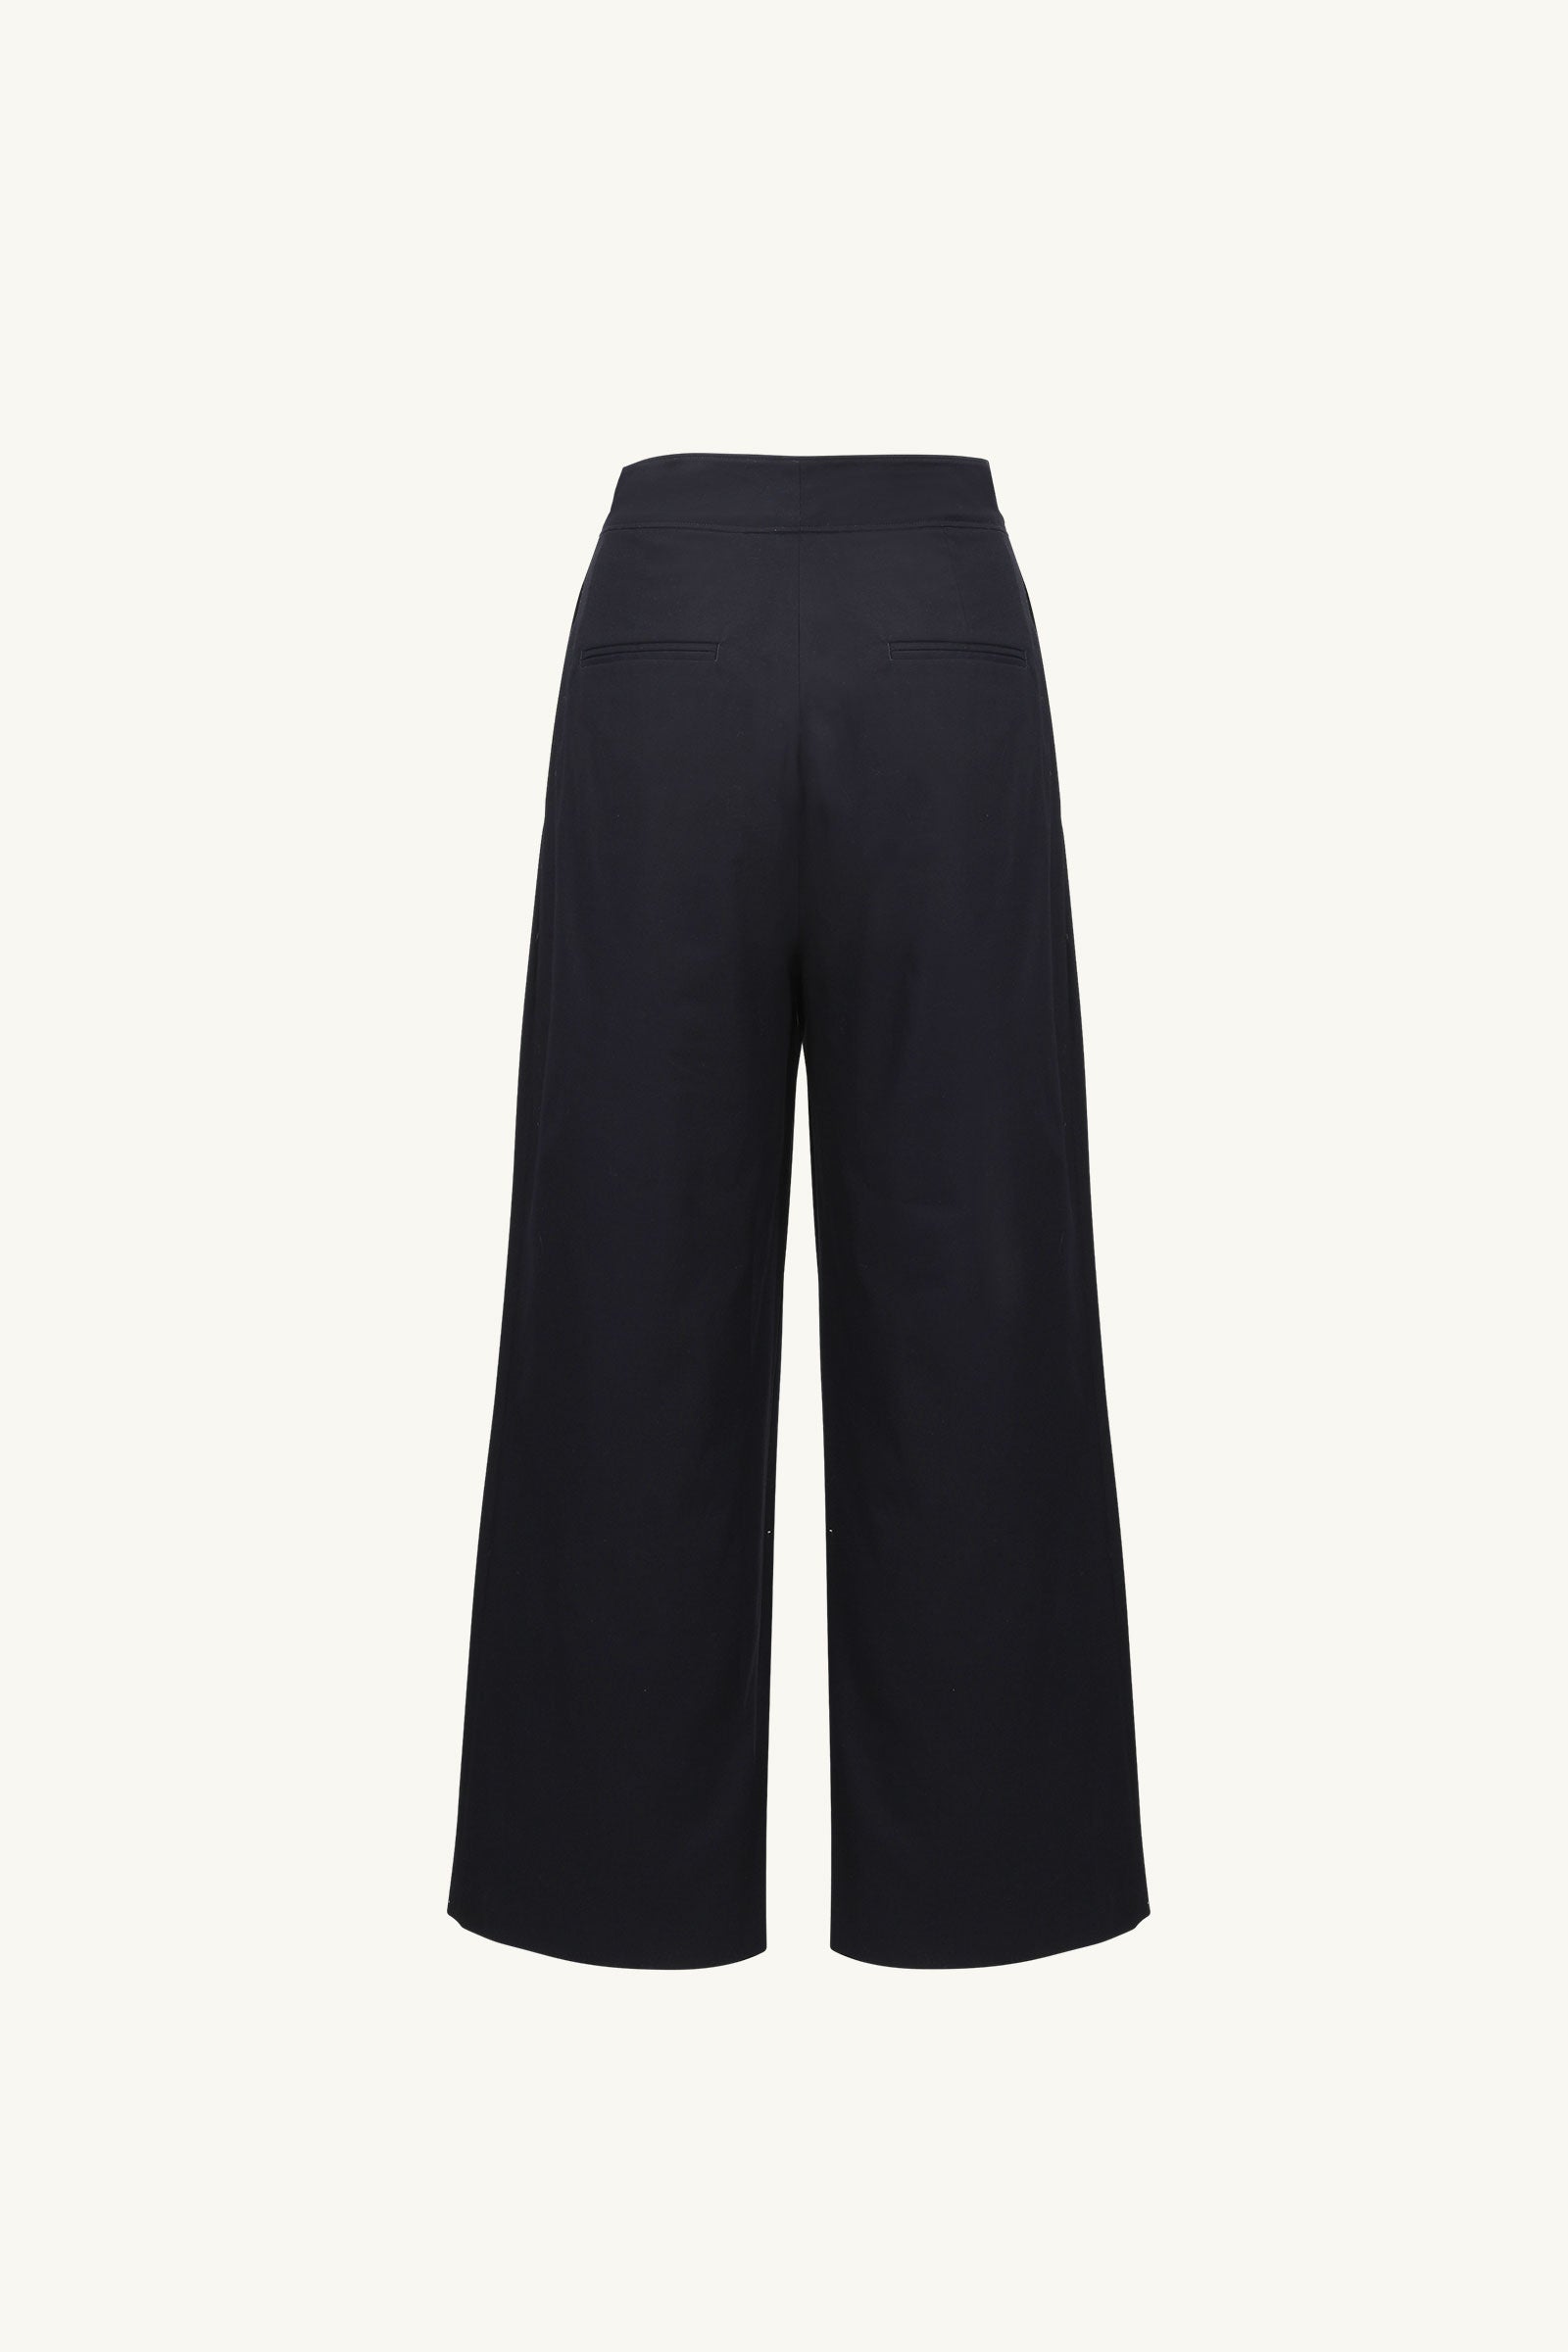 Gallery Trousers, Women's Straight Leg Pants, Navy Colour, Organic  Cotton Twill